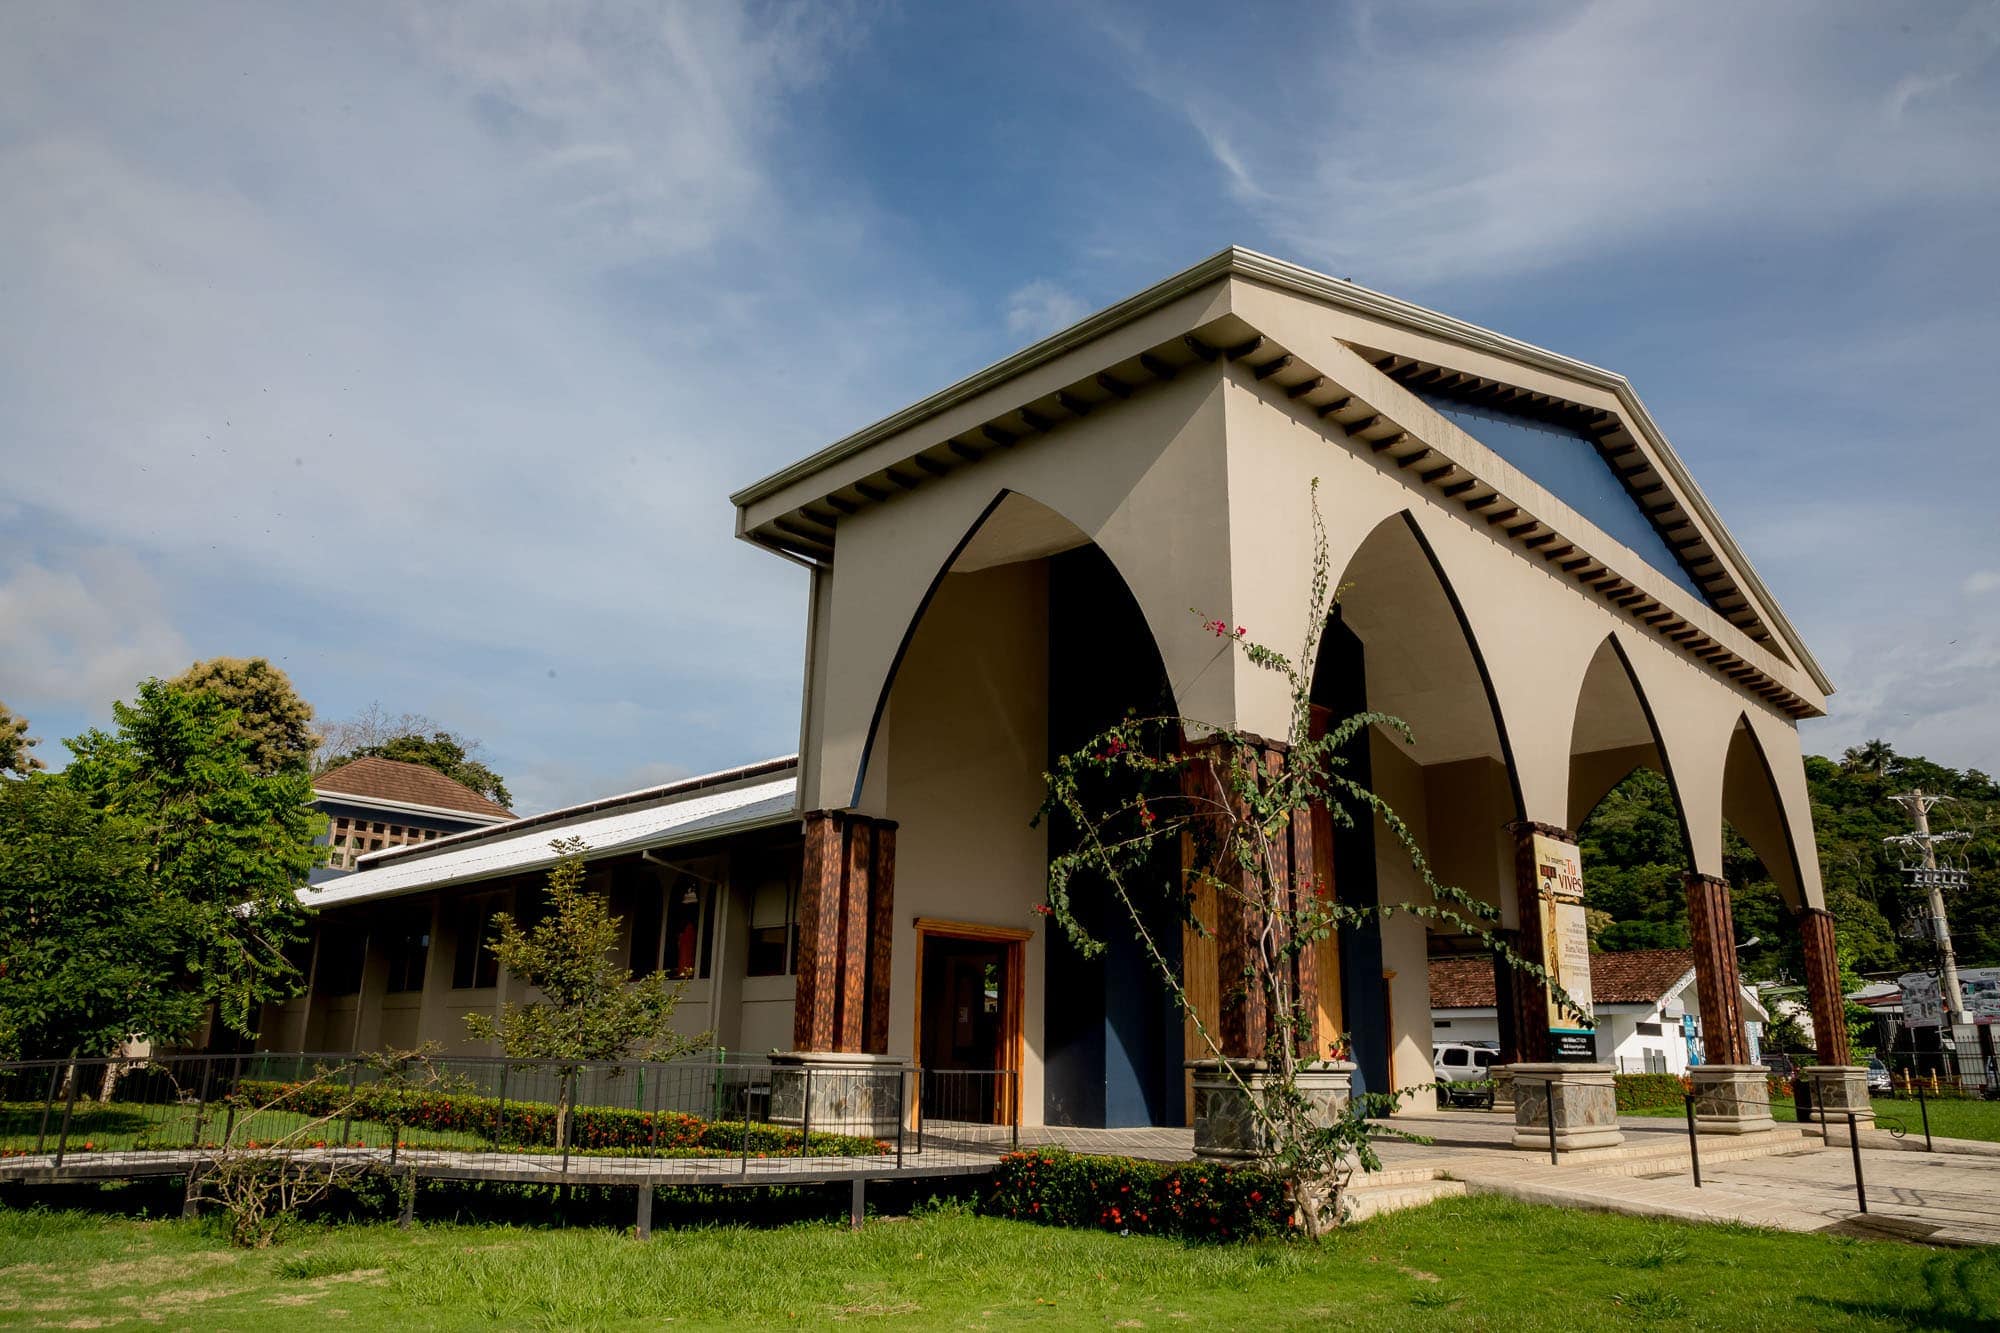 The Quepos Catholic Church